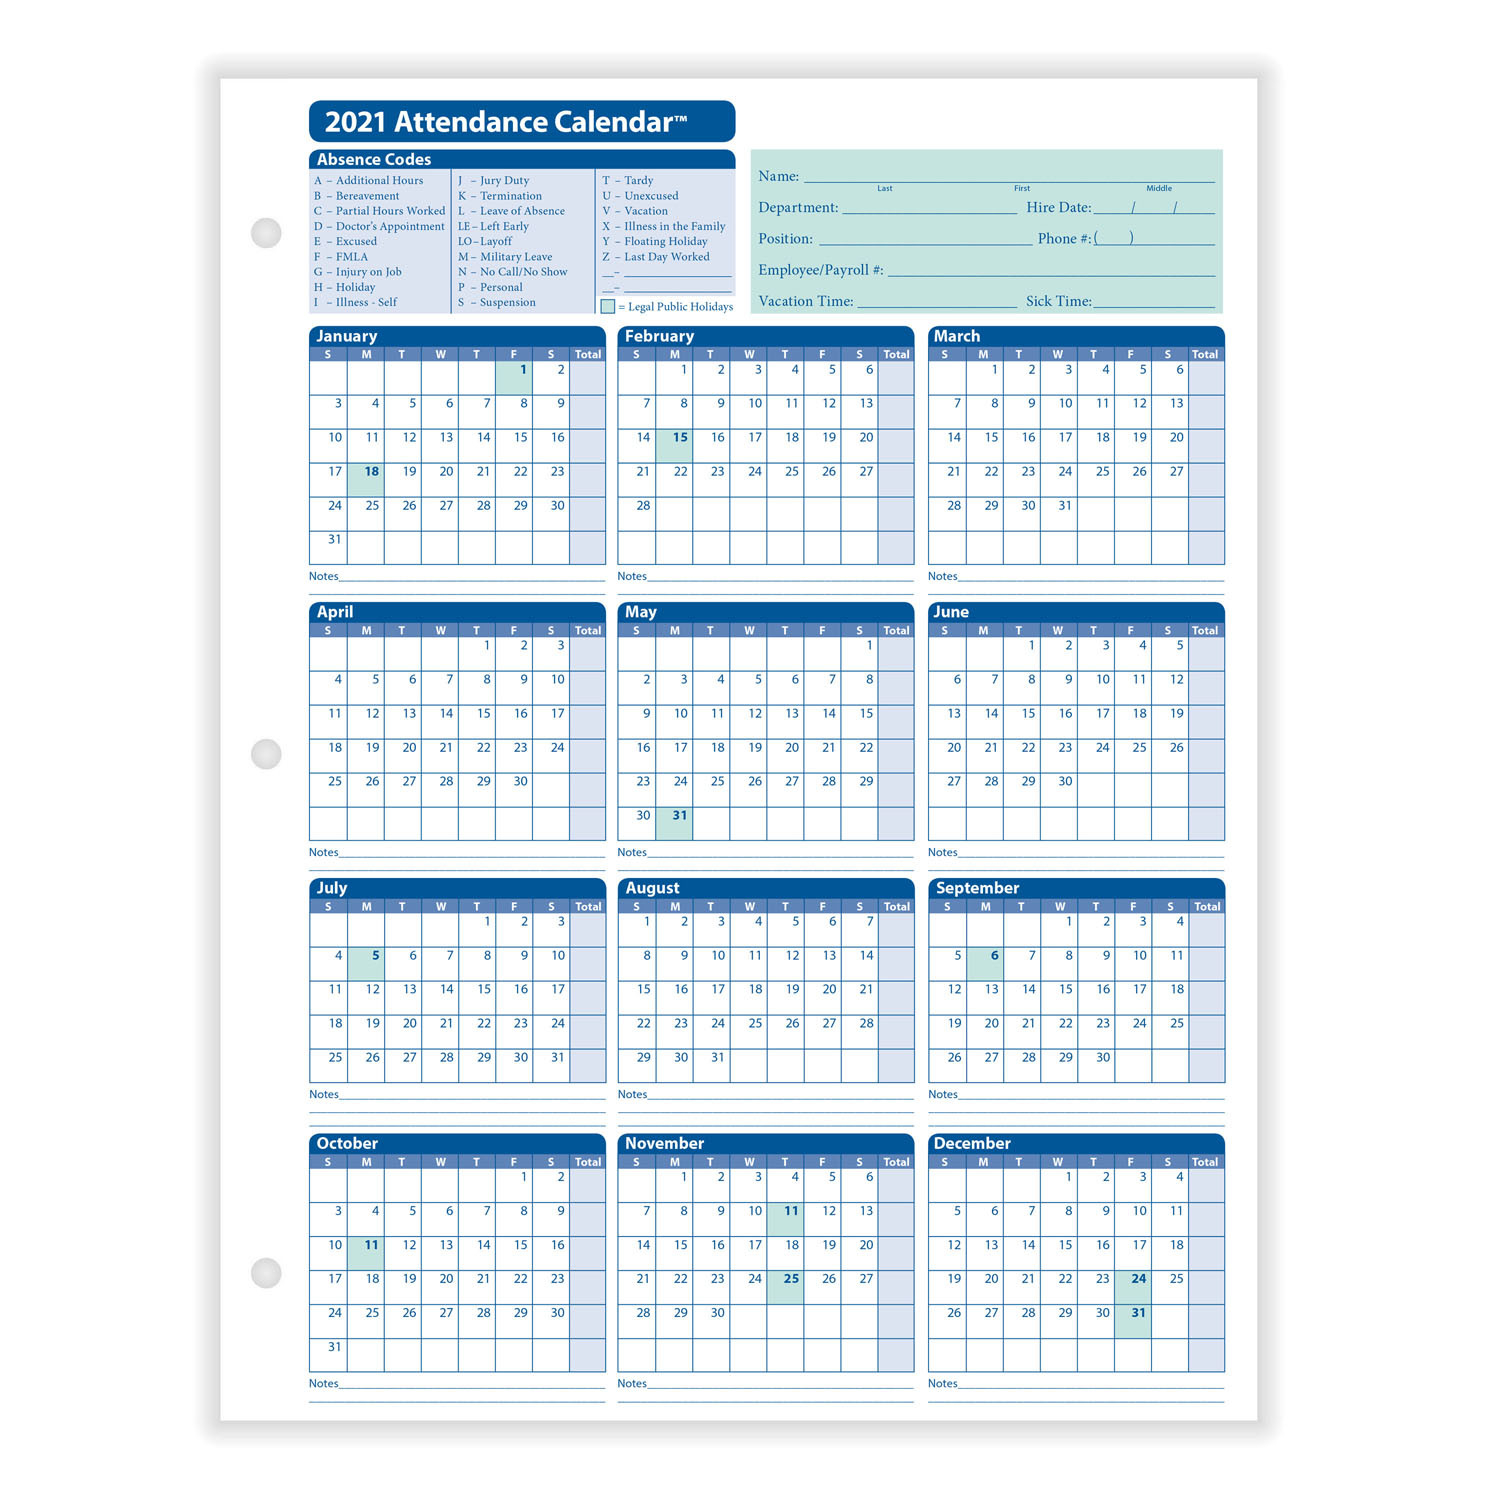 Absentee Calendar 2021 | Huts Calendar-Printable 2021 Employee Attendance Controller